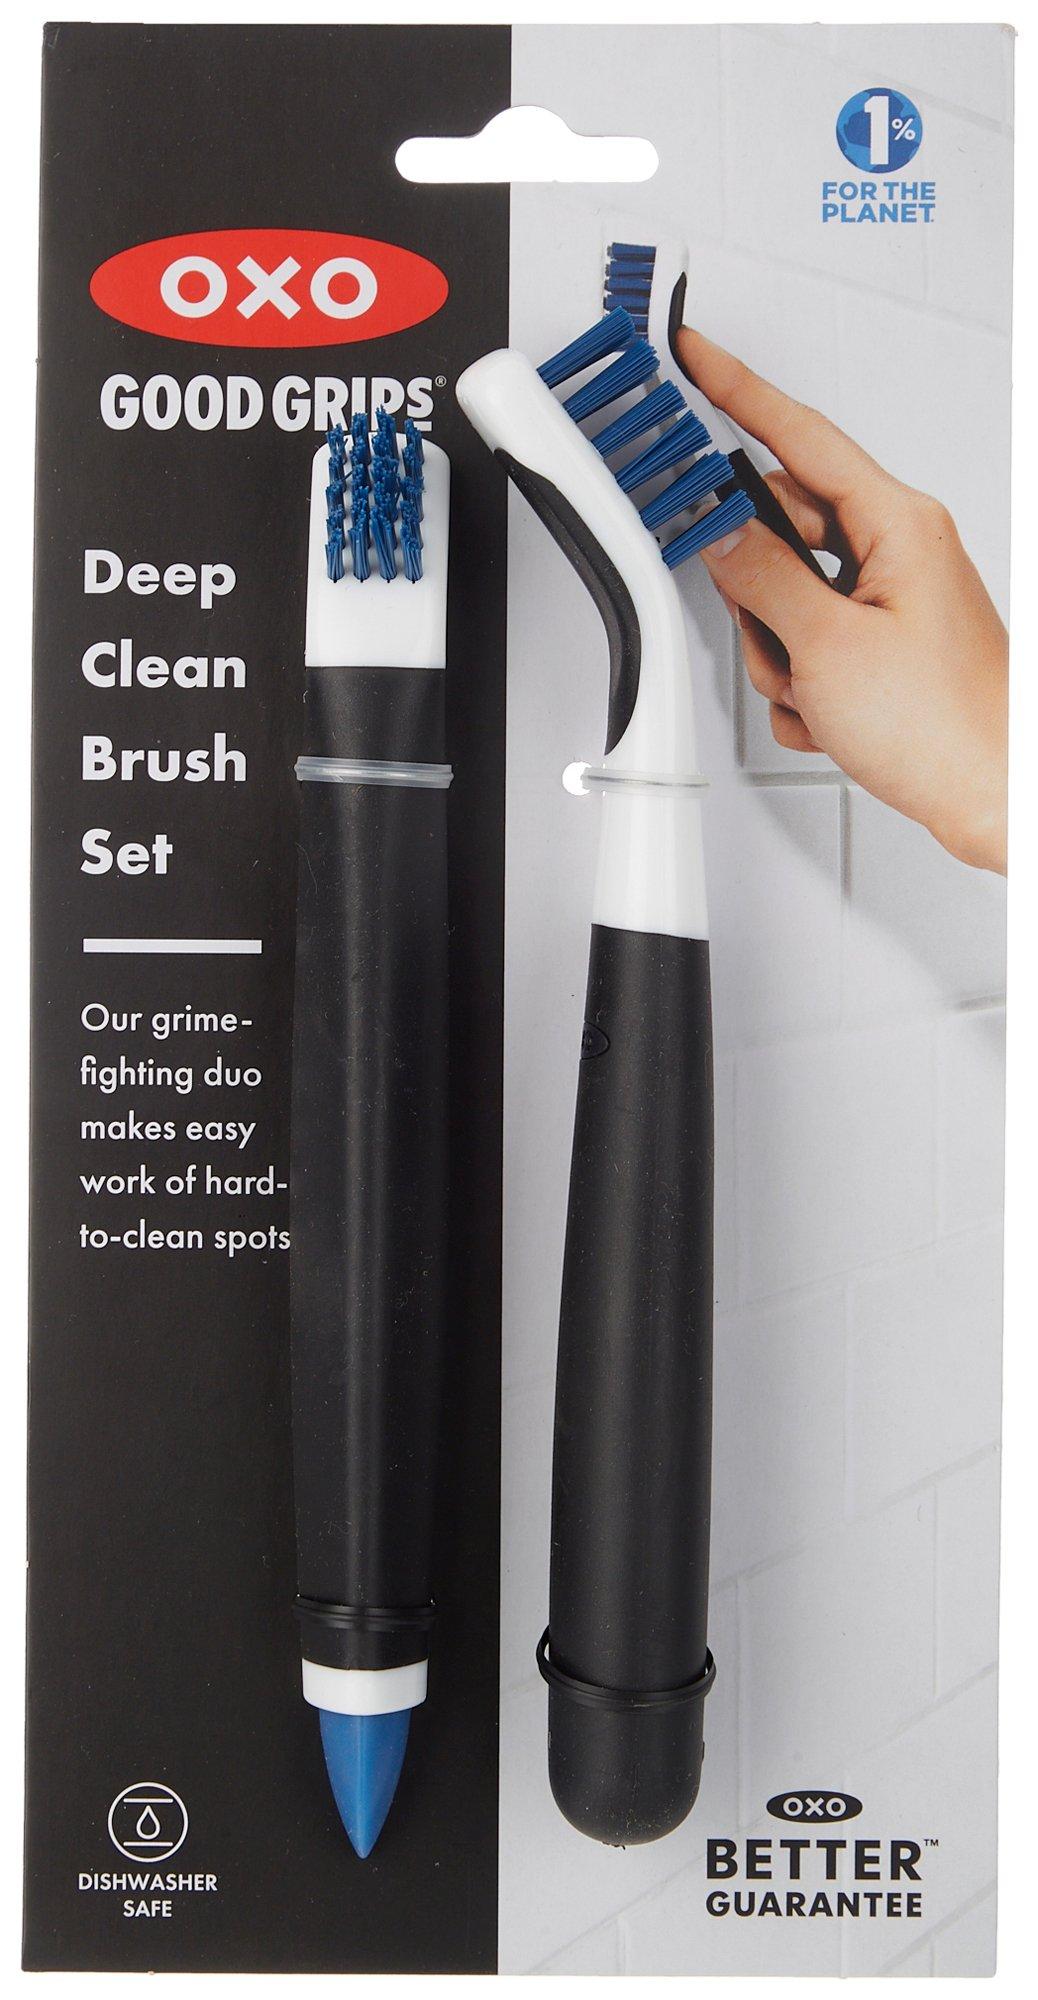 Good Grips Deep Clean Brush Set